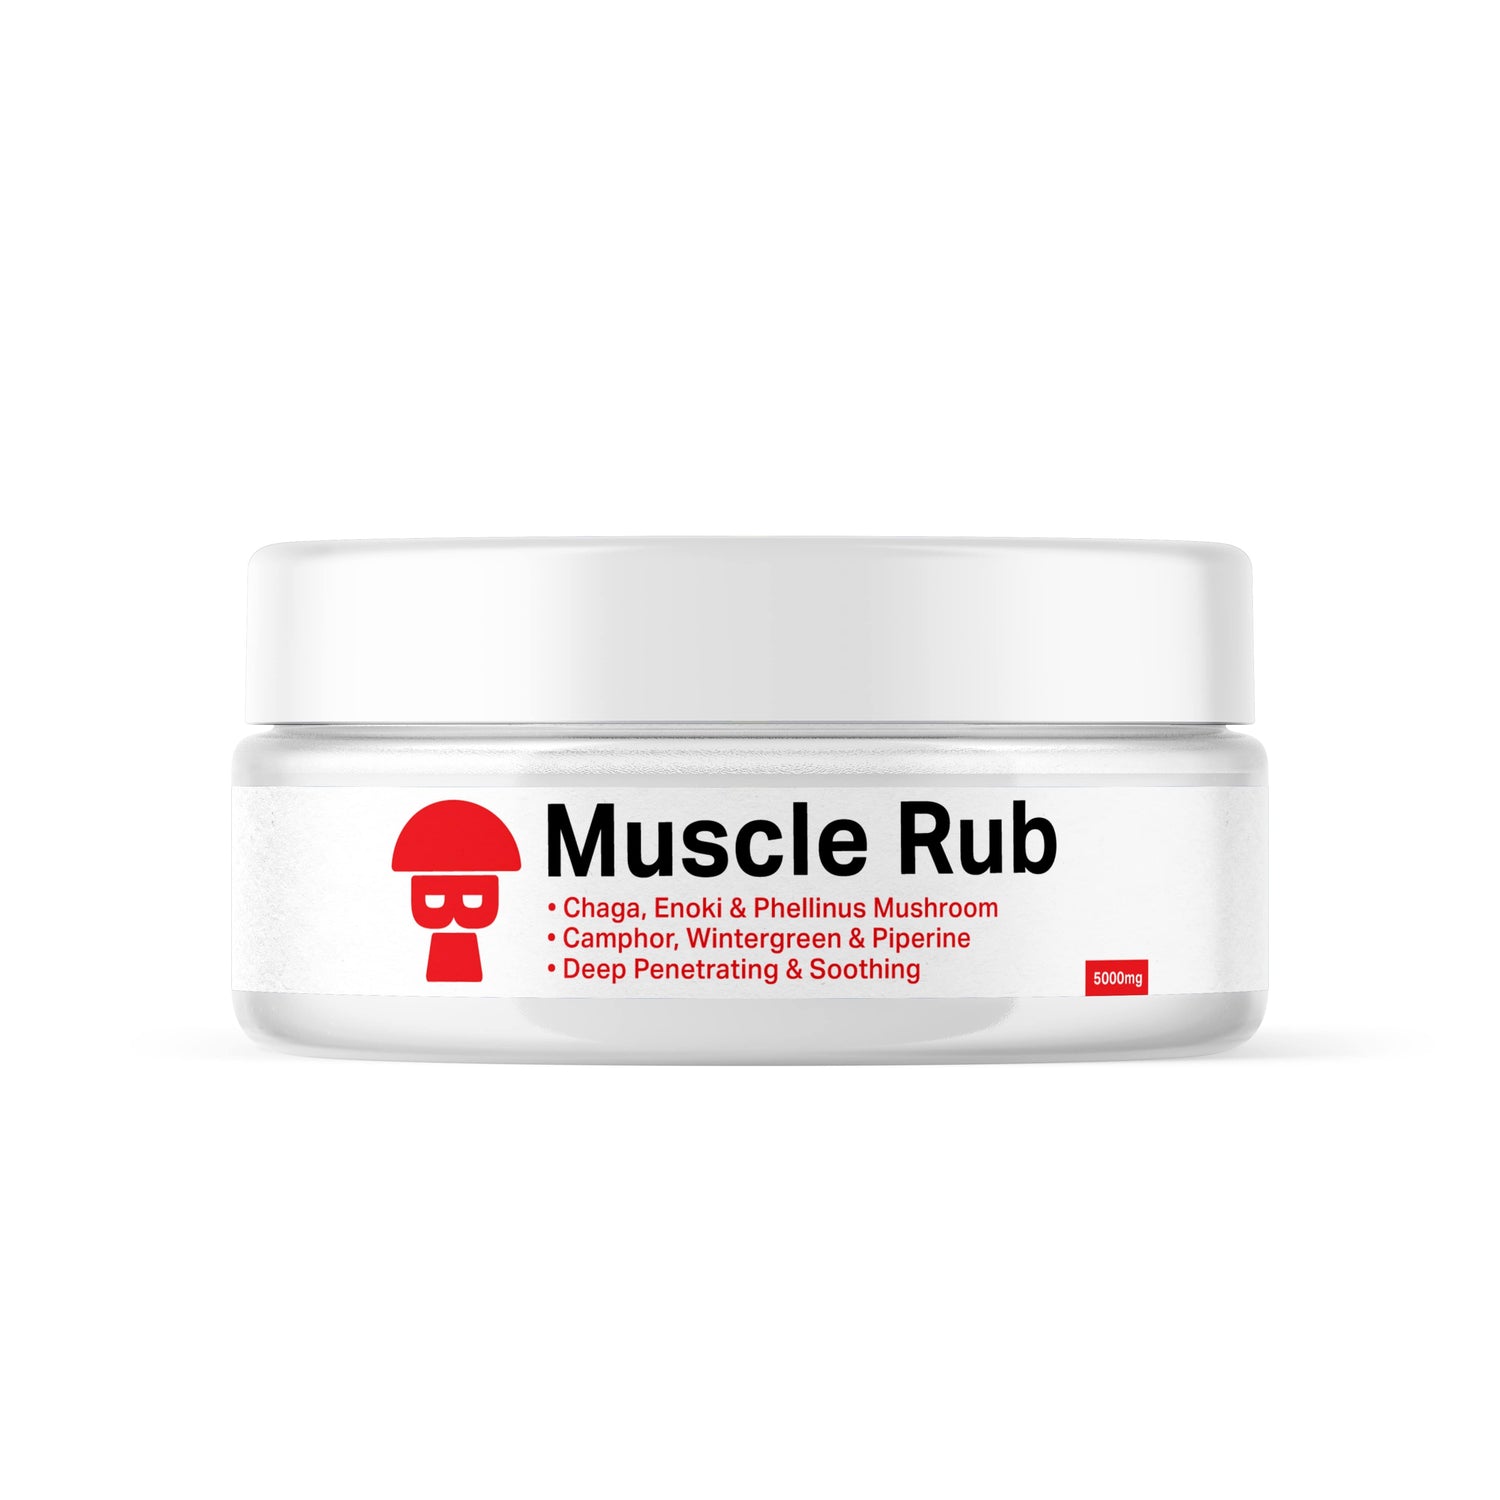 Muscle Rub